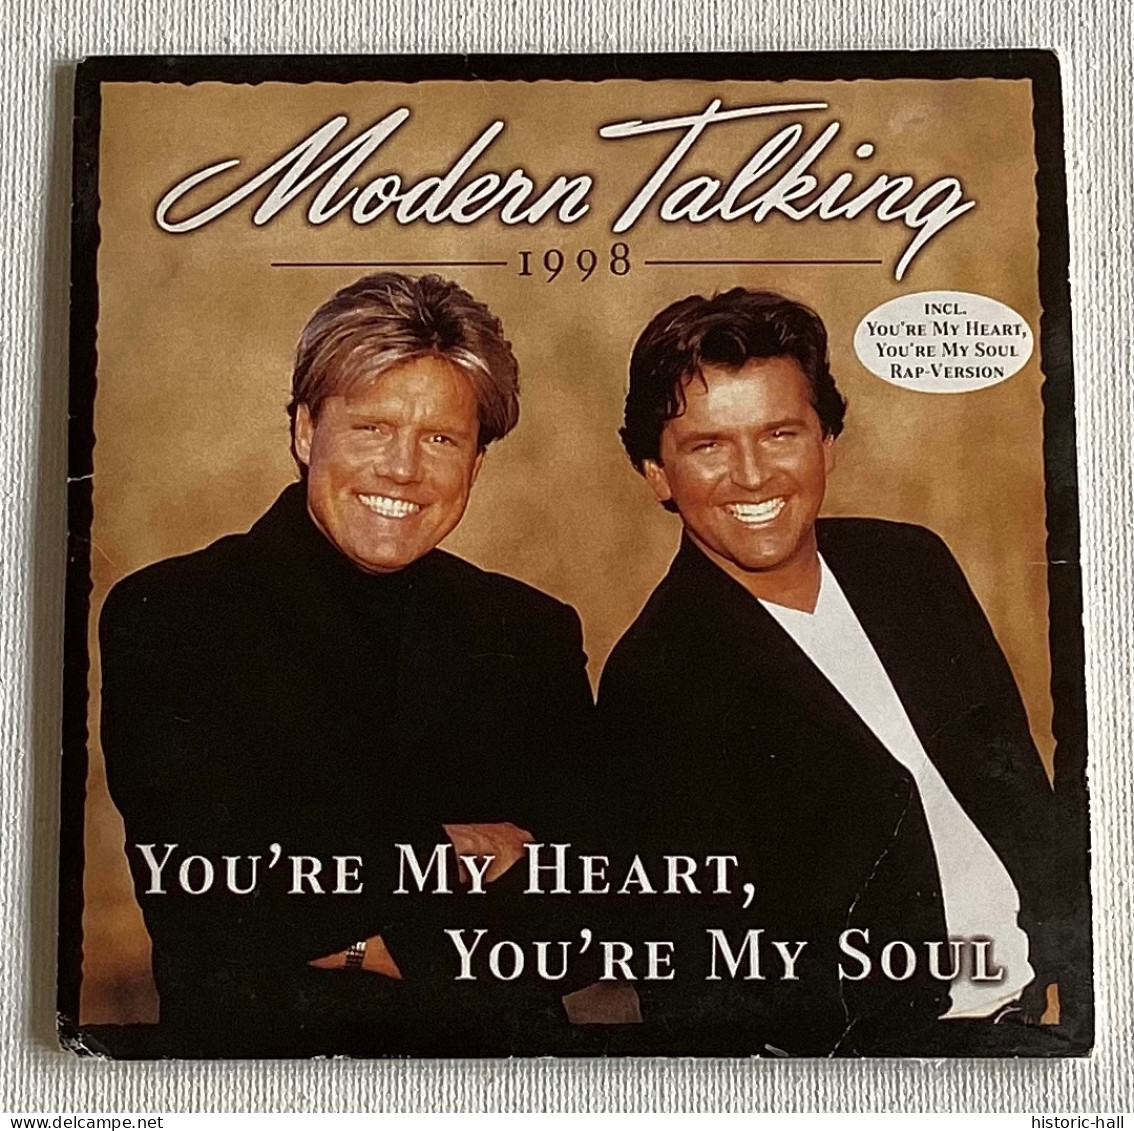 MODERN TALKING - you’re m’y heart - CD Single - 1998 - Euro press